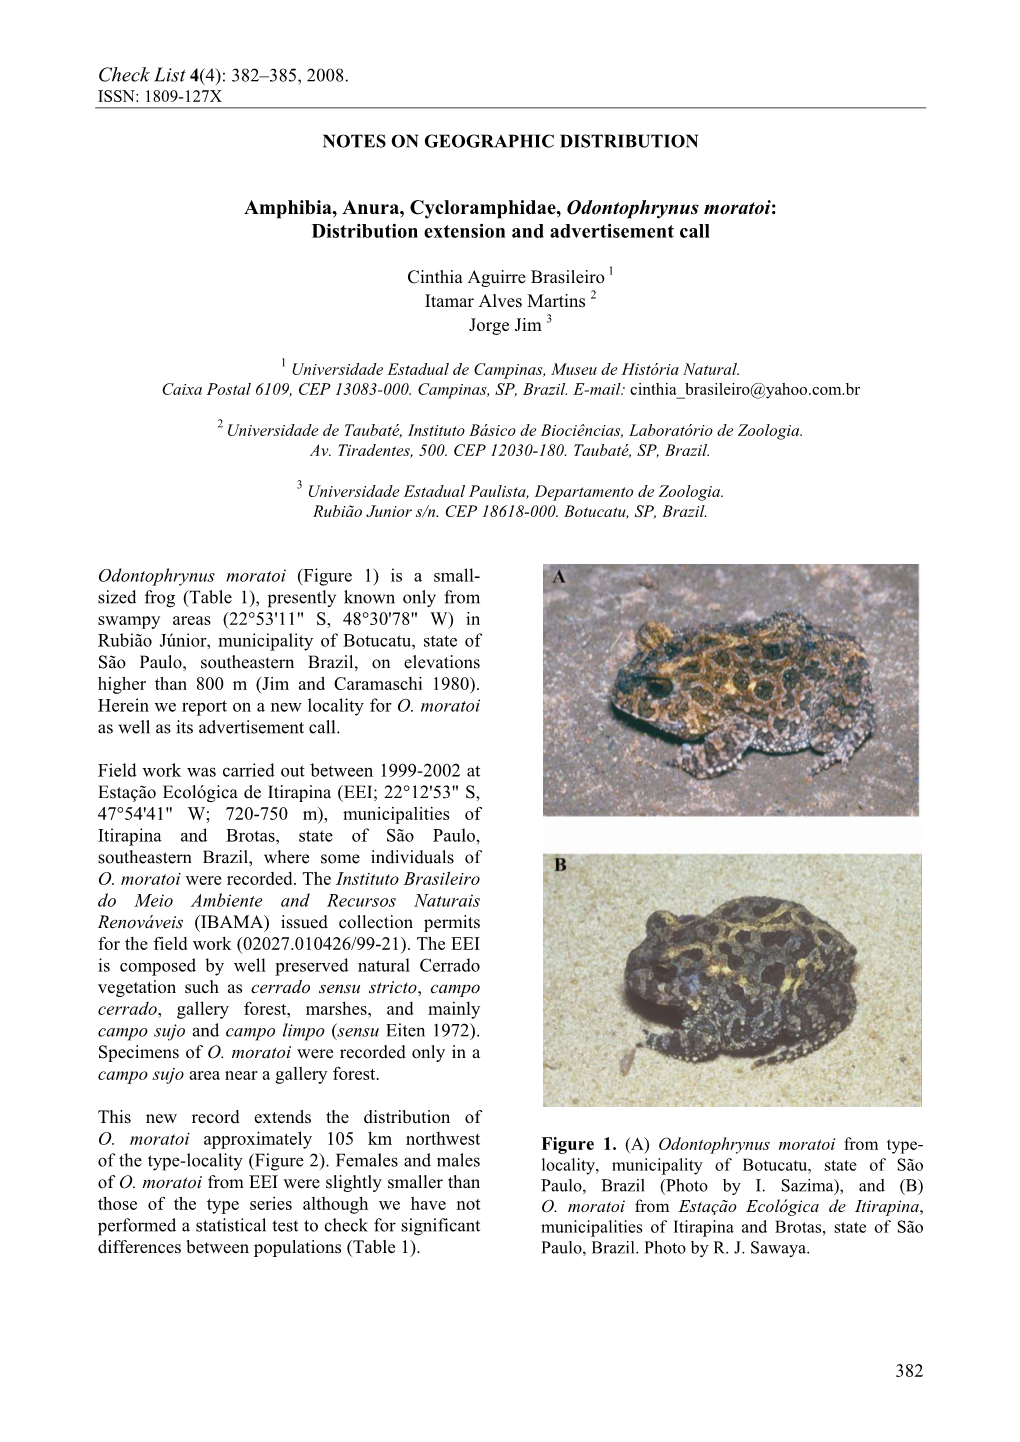 Amphibia, Anura, Cycloramphidae, Odontophrynus Moratoi: Distribution Extension and Advertisement Call